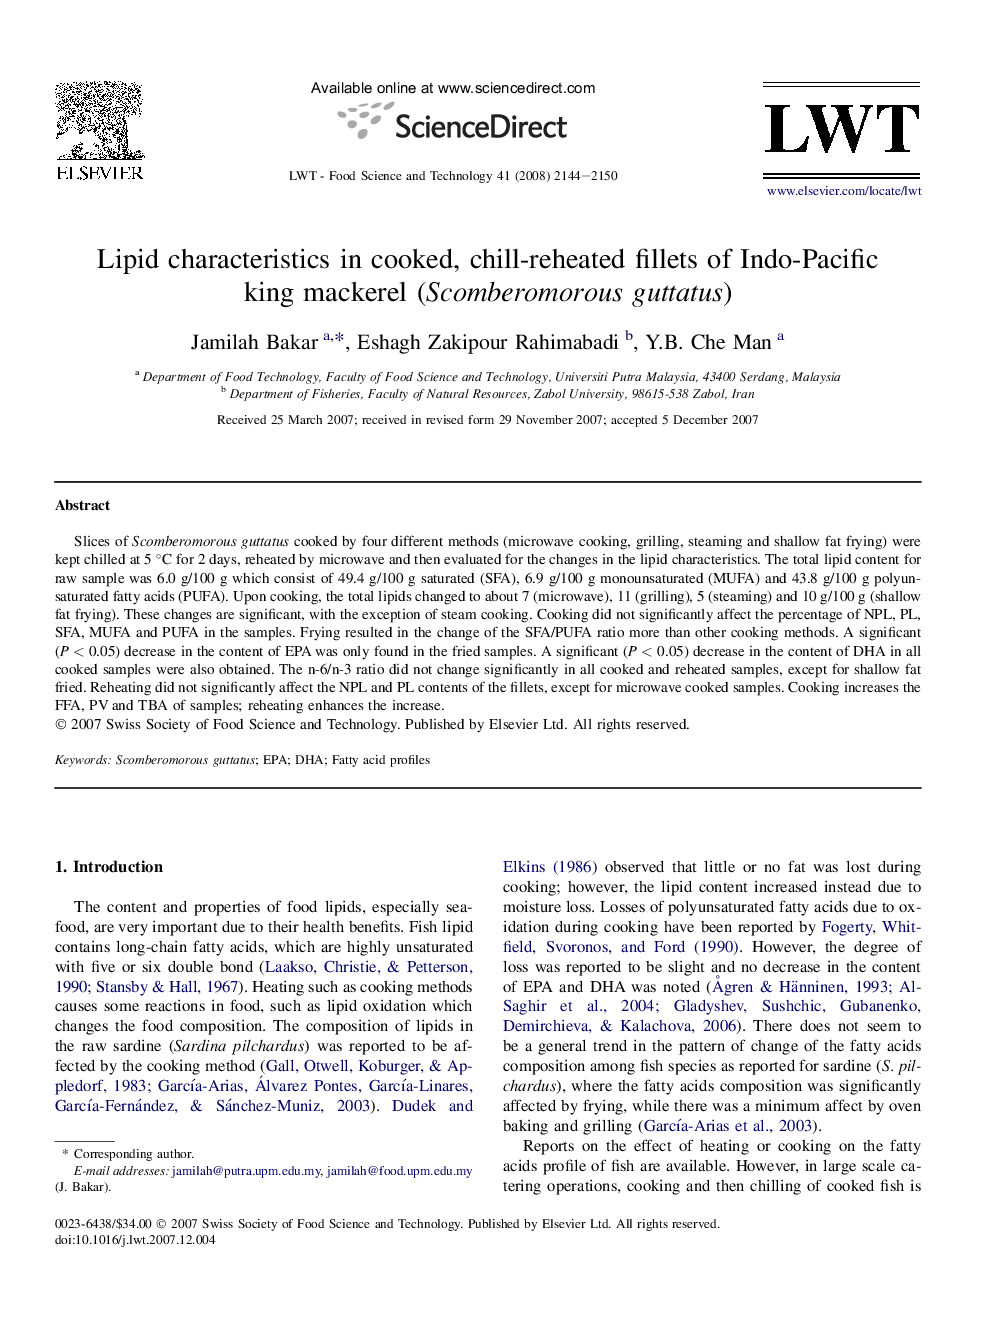 Lipid characteristics in cooked, chill-reheated fillets of Indo-Pacific king mackerel (Scomberomorous guttatus)